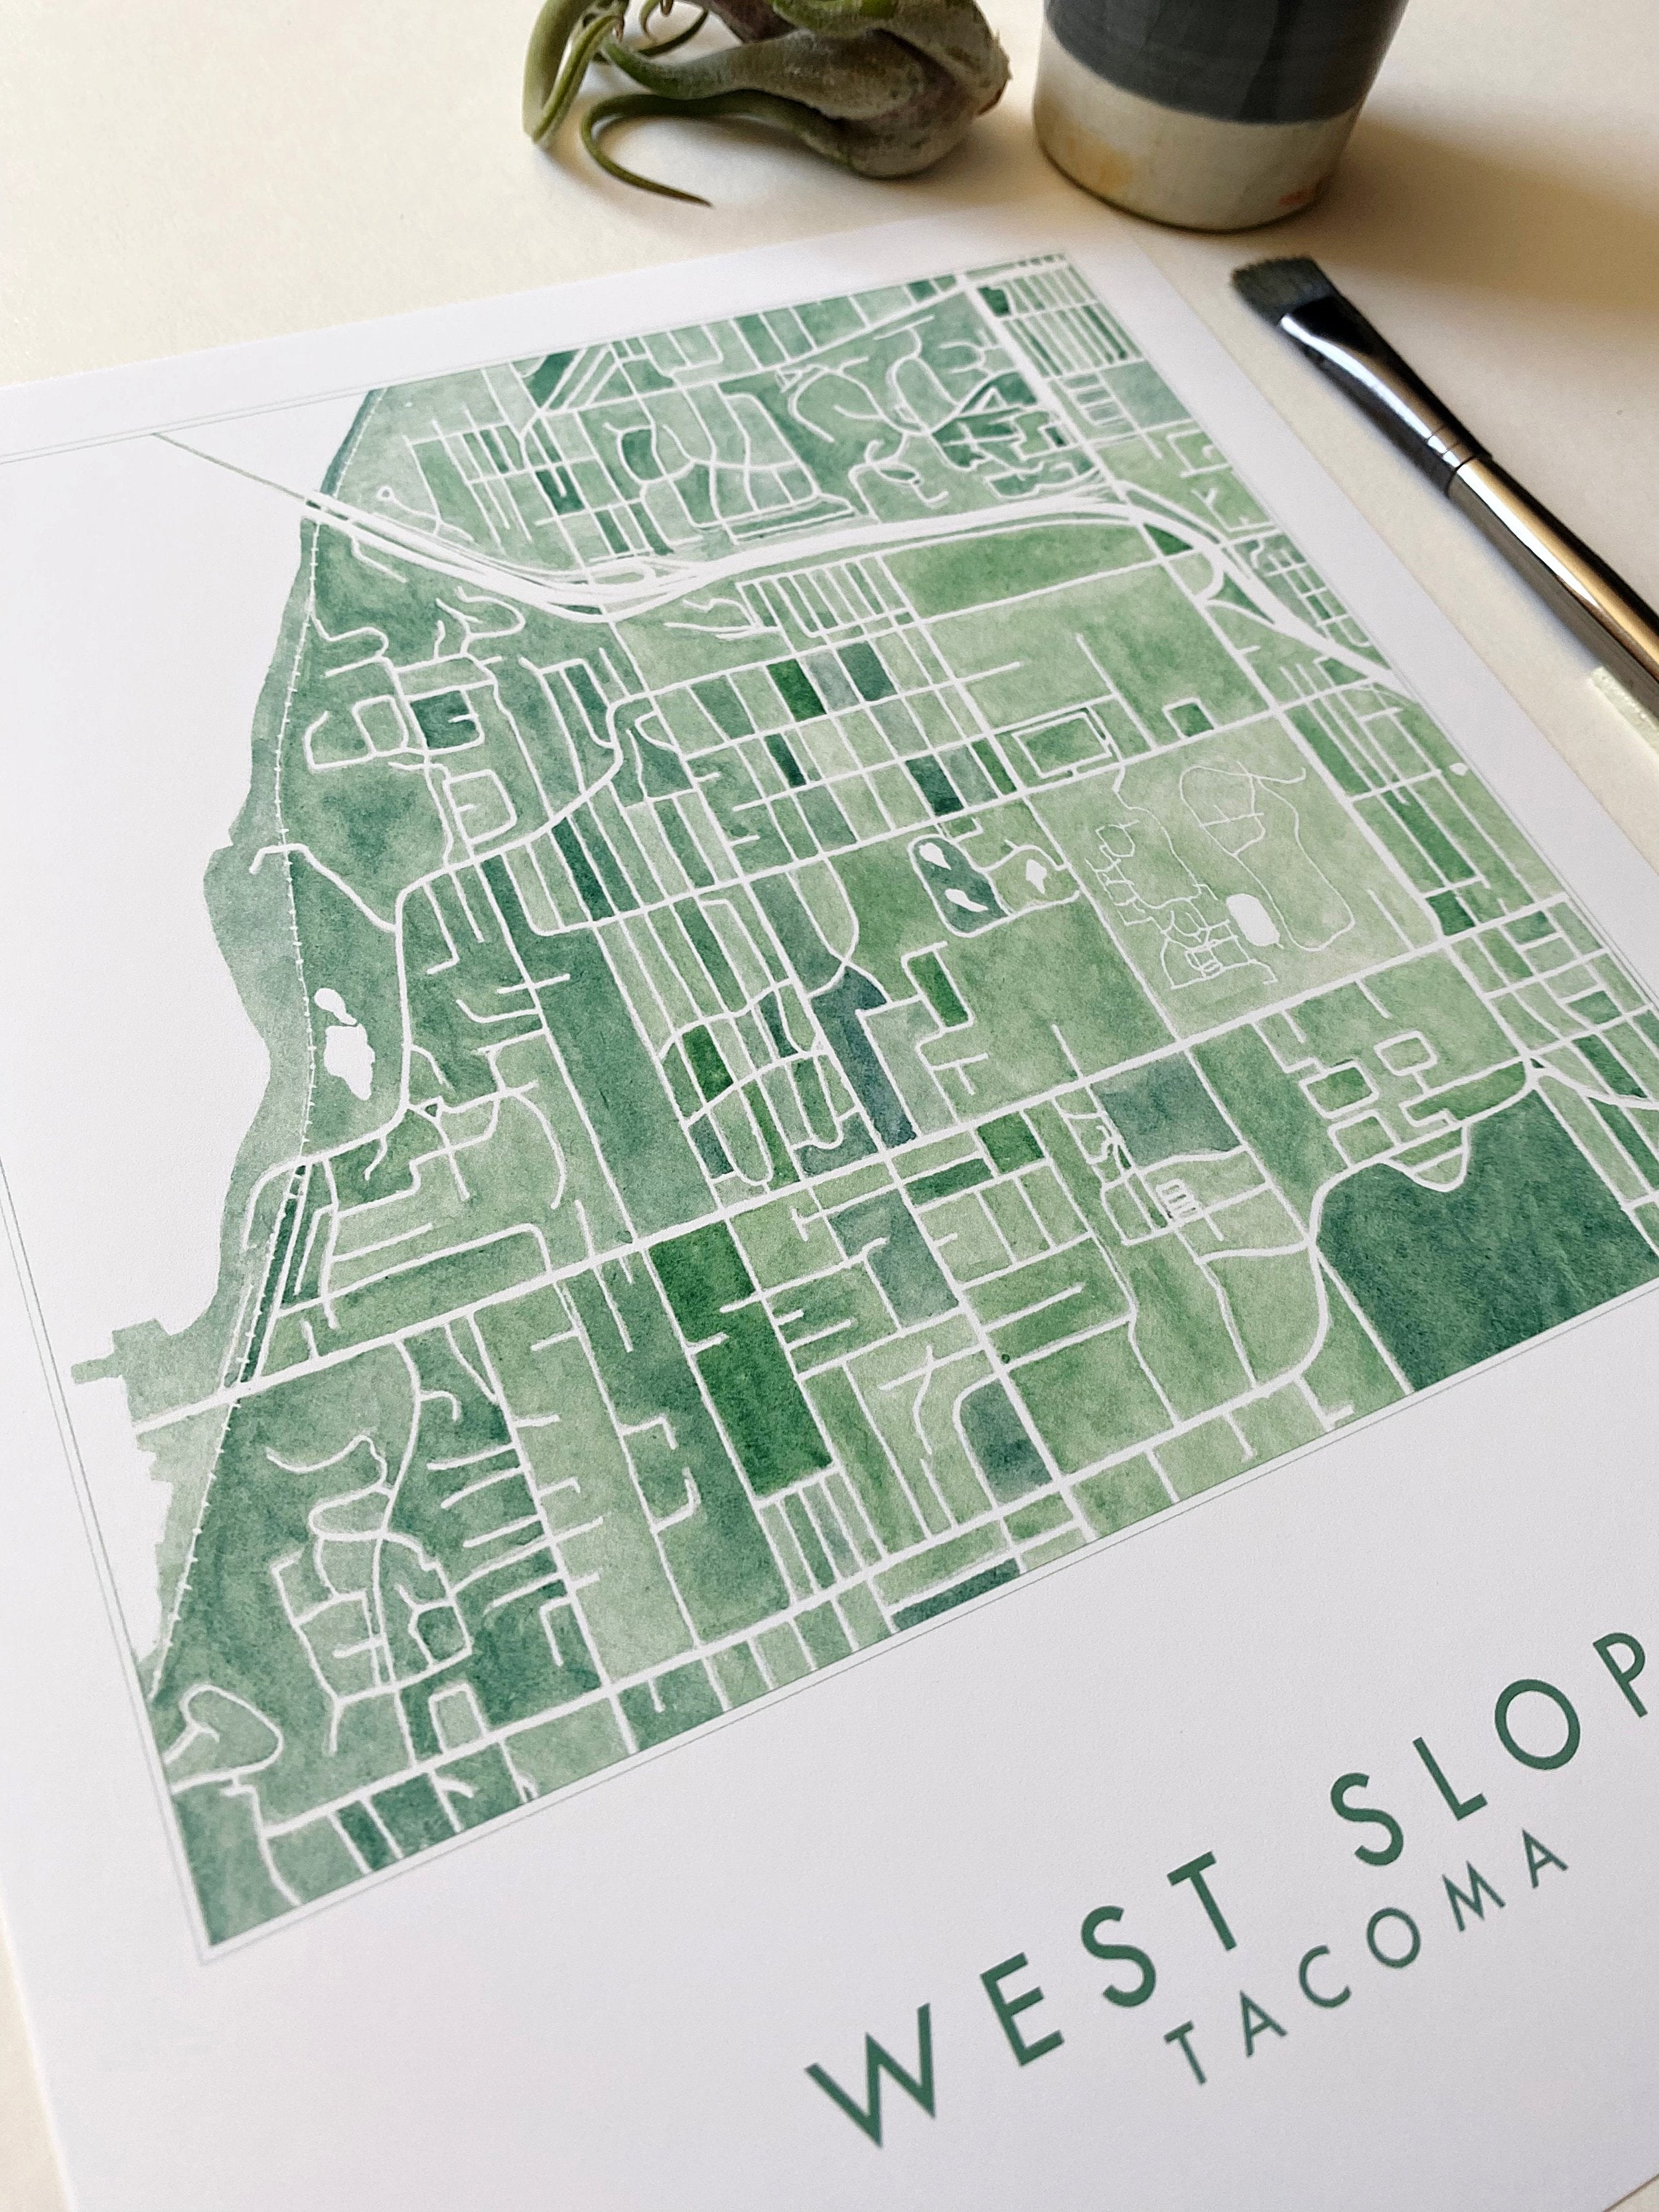 West Slope TACOMA Neighborhood Watercolor Map: PRINT